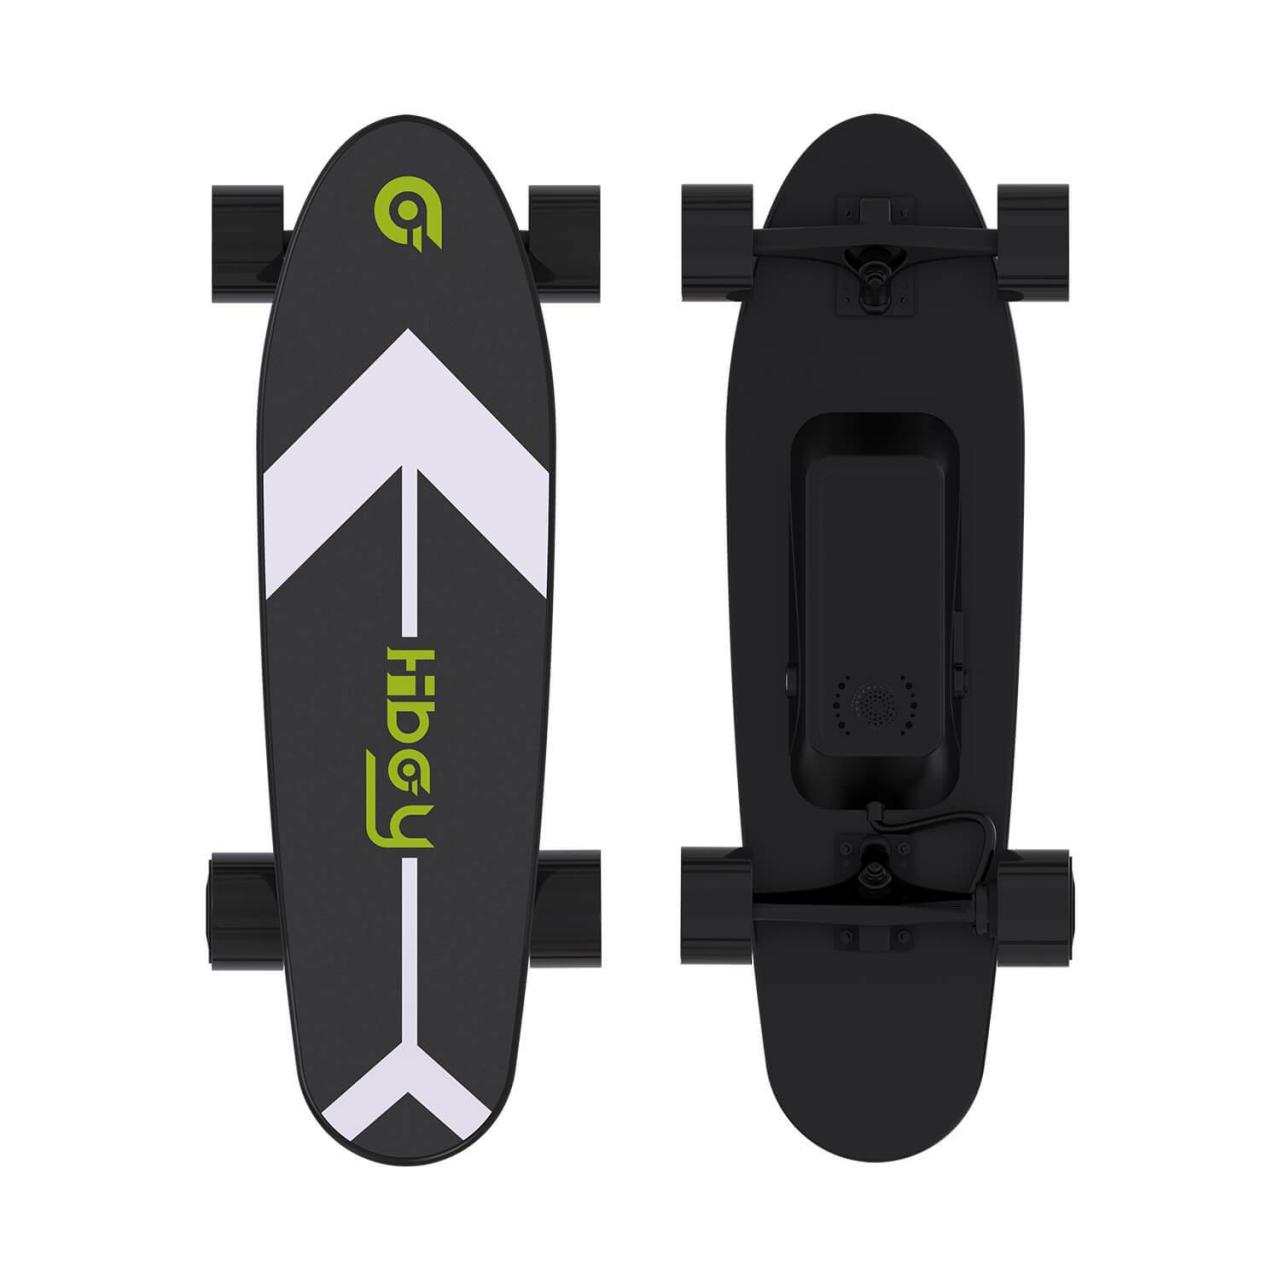 Buy Hiboy S11 Electric Scooter Skateboard 4 Wheels with Wireless Remote  Longboard Online in Vietnam. 392322211098